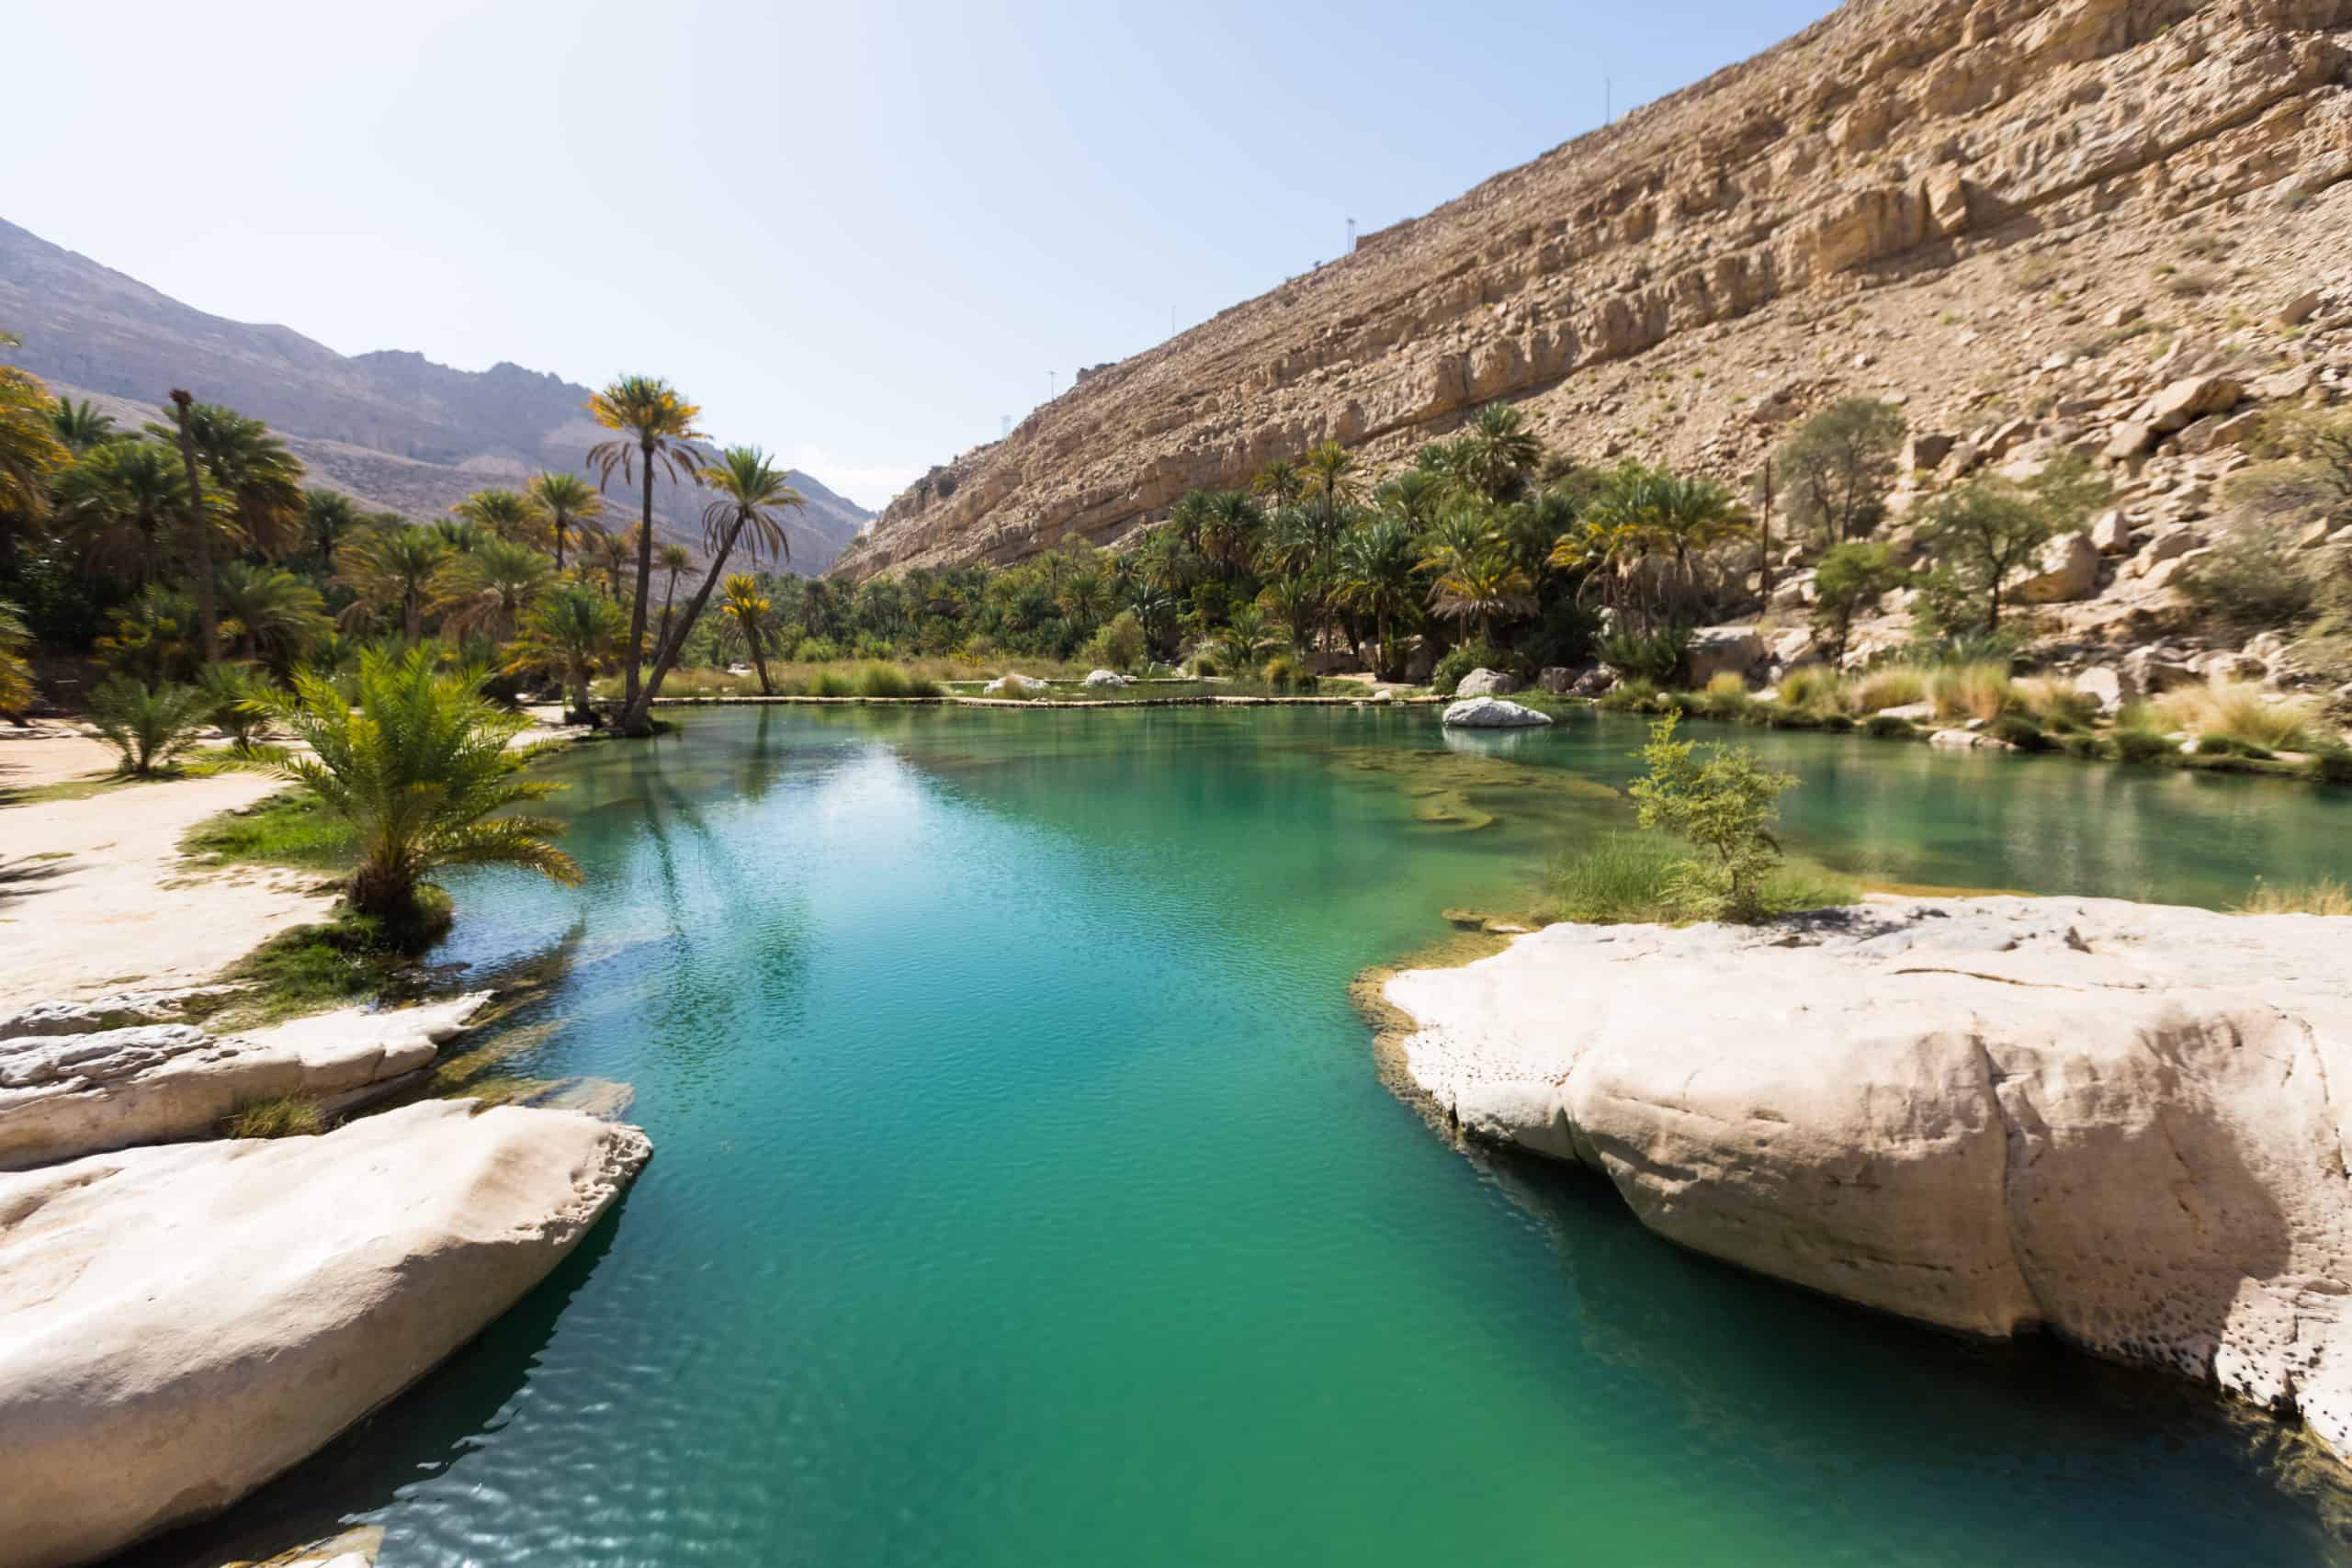 A Day in Oman’s Most Beautiful Wadi ‘Wadi Bani Khalid’; an Oasis in the Desert of Oman